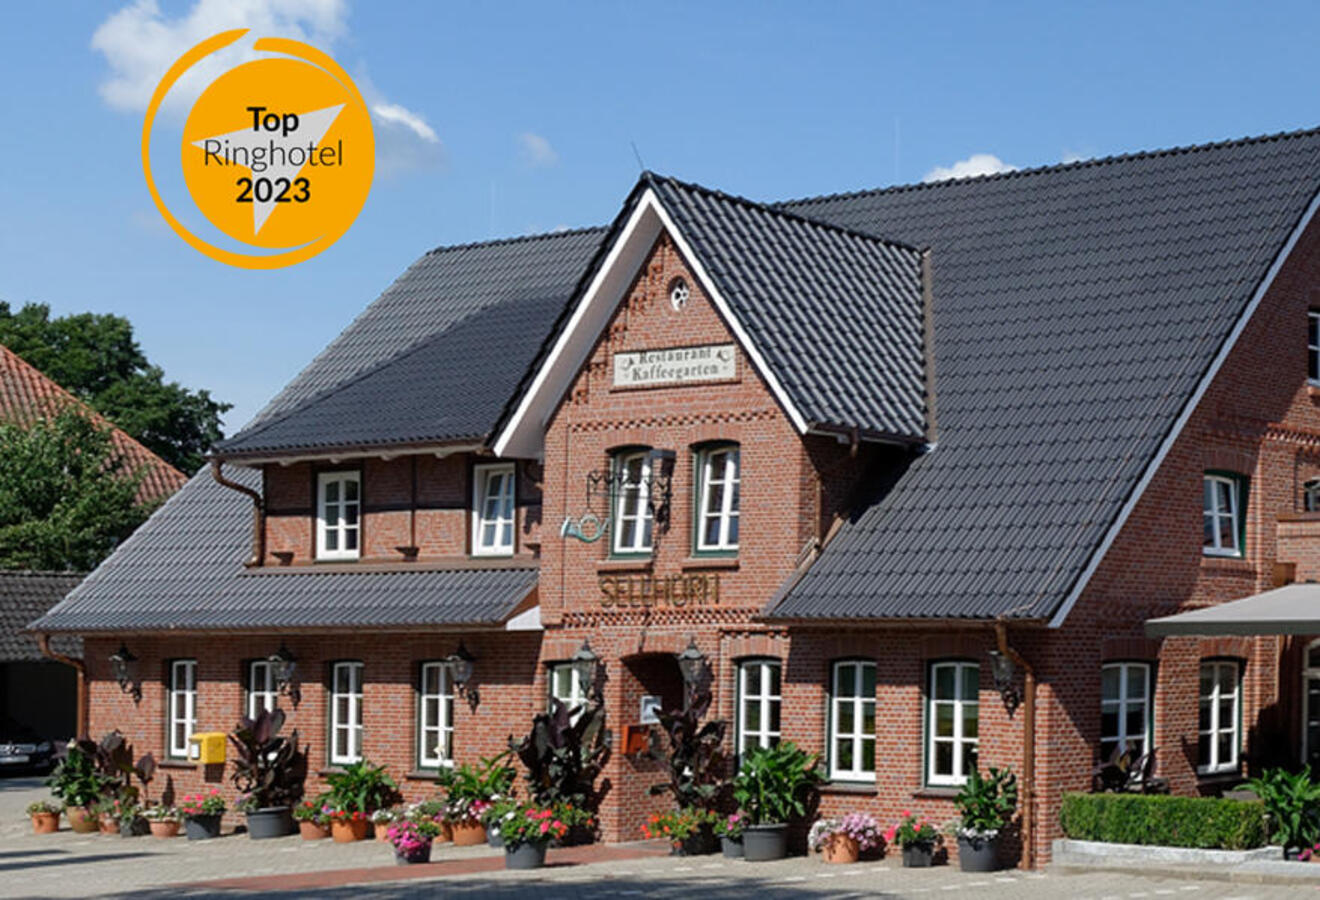 Top Ringhotel 2023, Ringhotel Sellhorn in Hanstedt